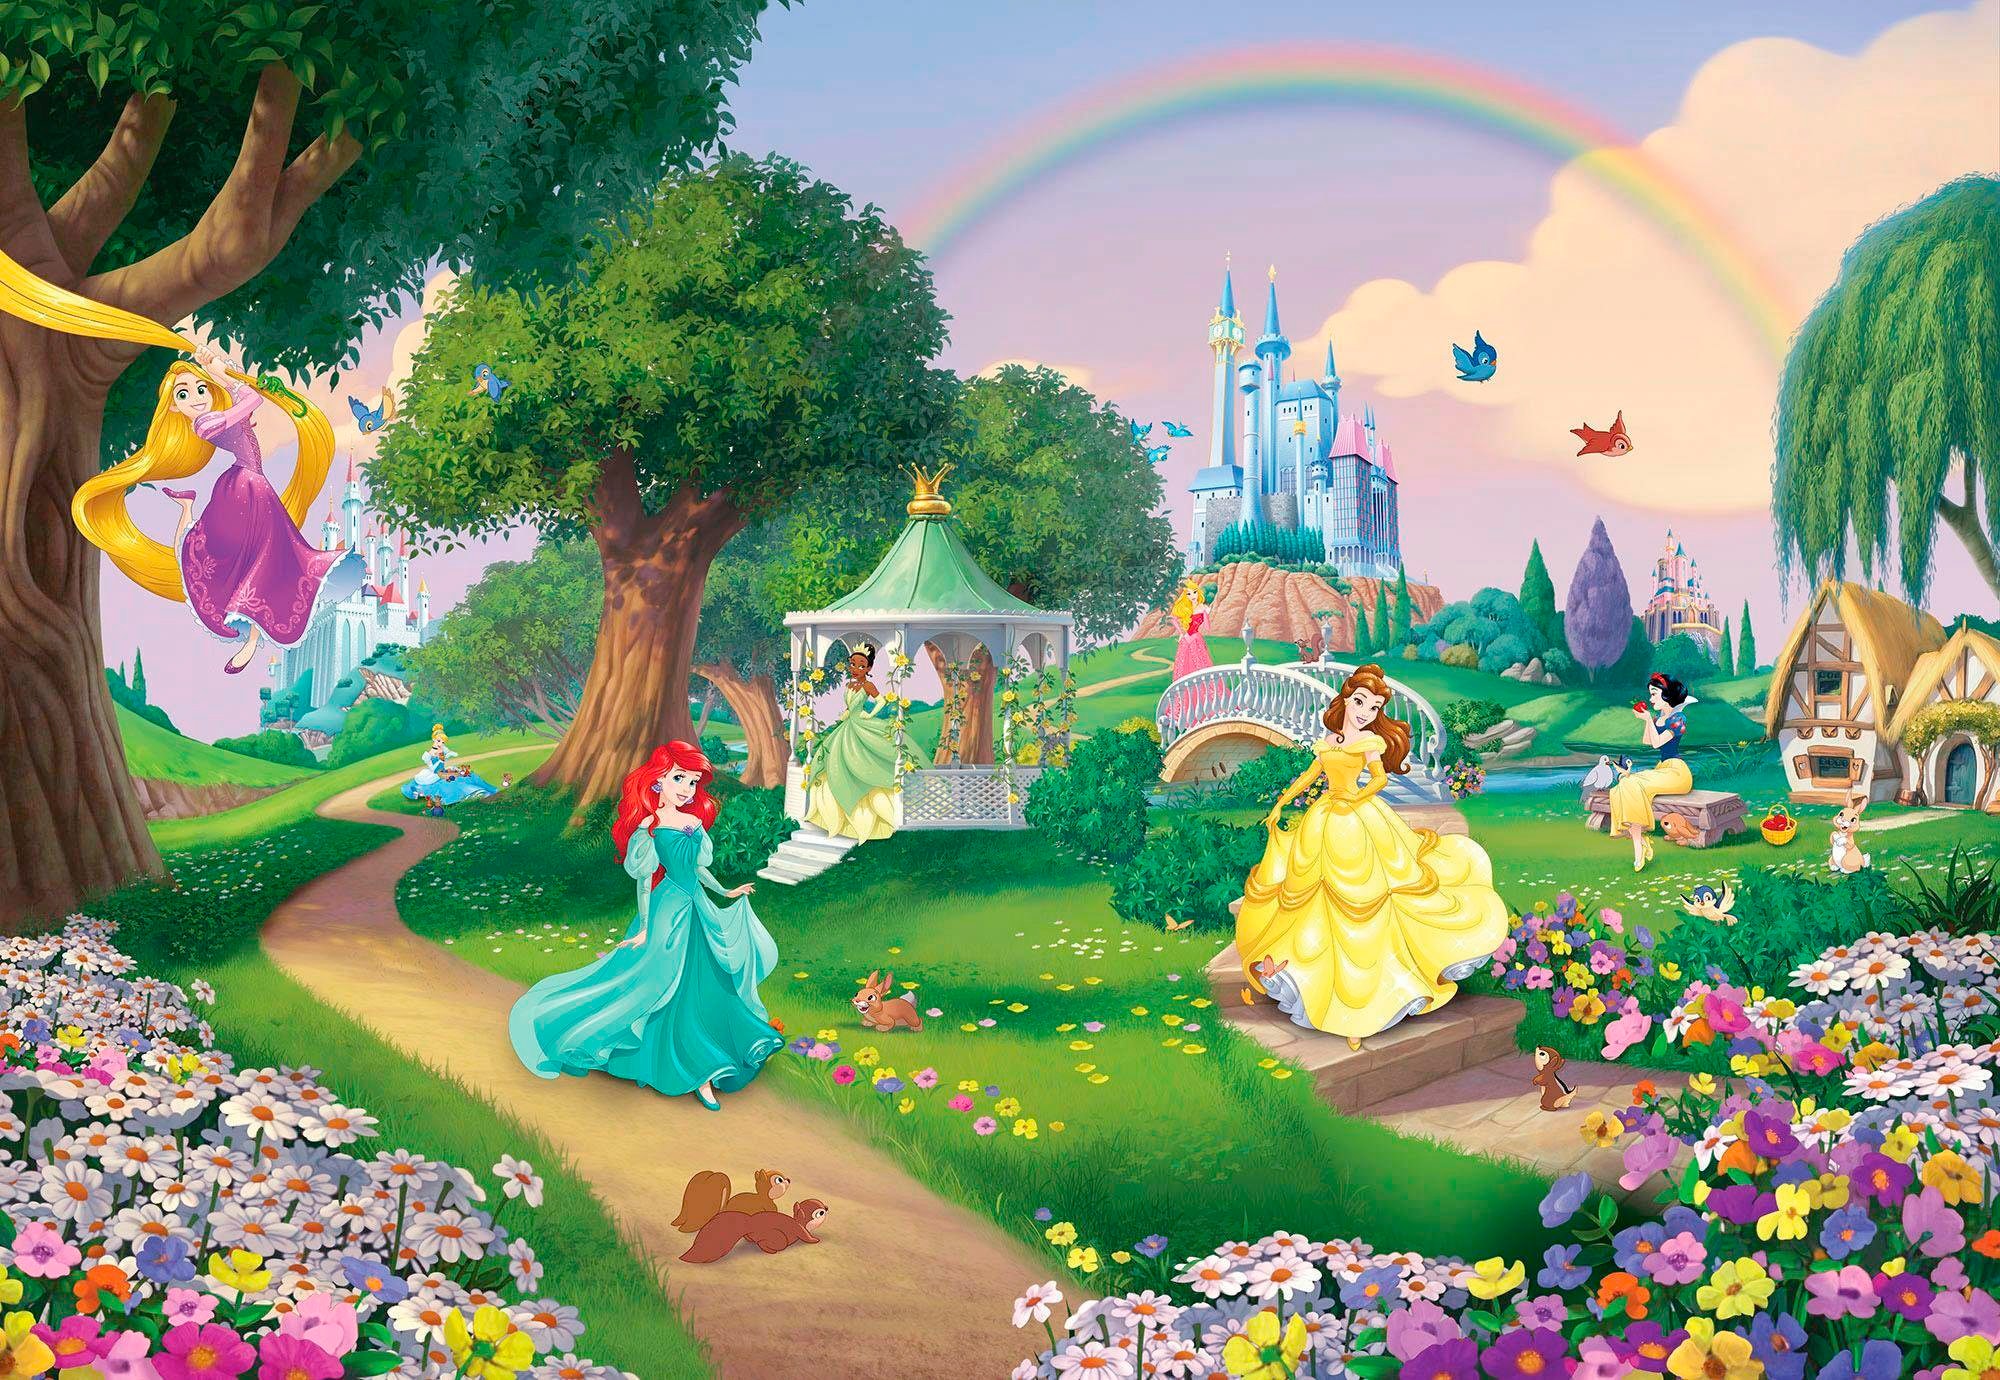 Fototapete »Disney Princess Rainbow«, 368x254 cm (Breite x Höhe), inklusive Kleister